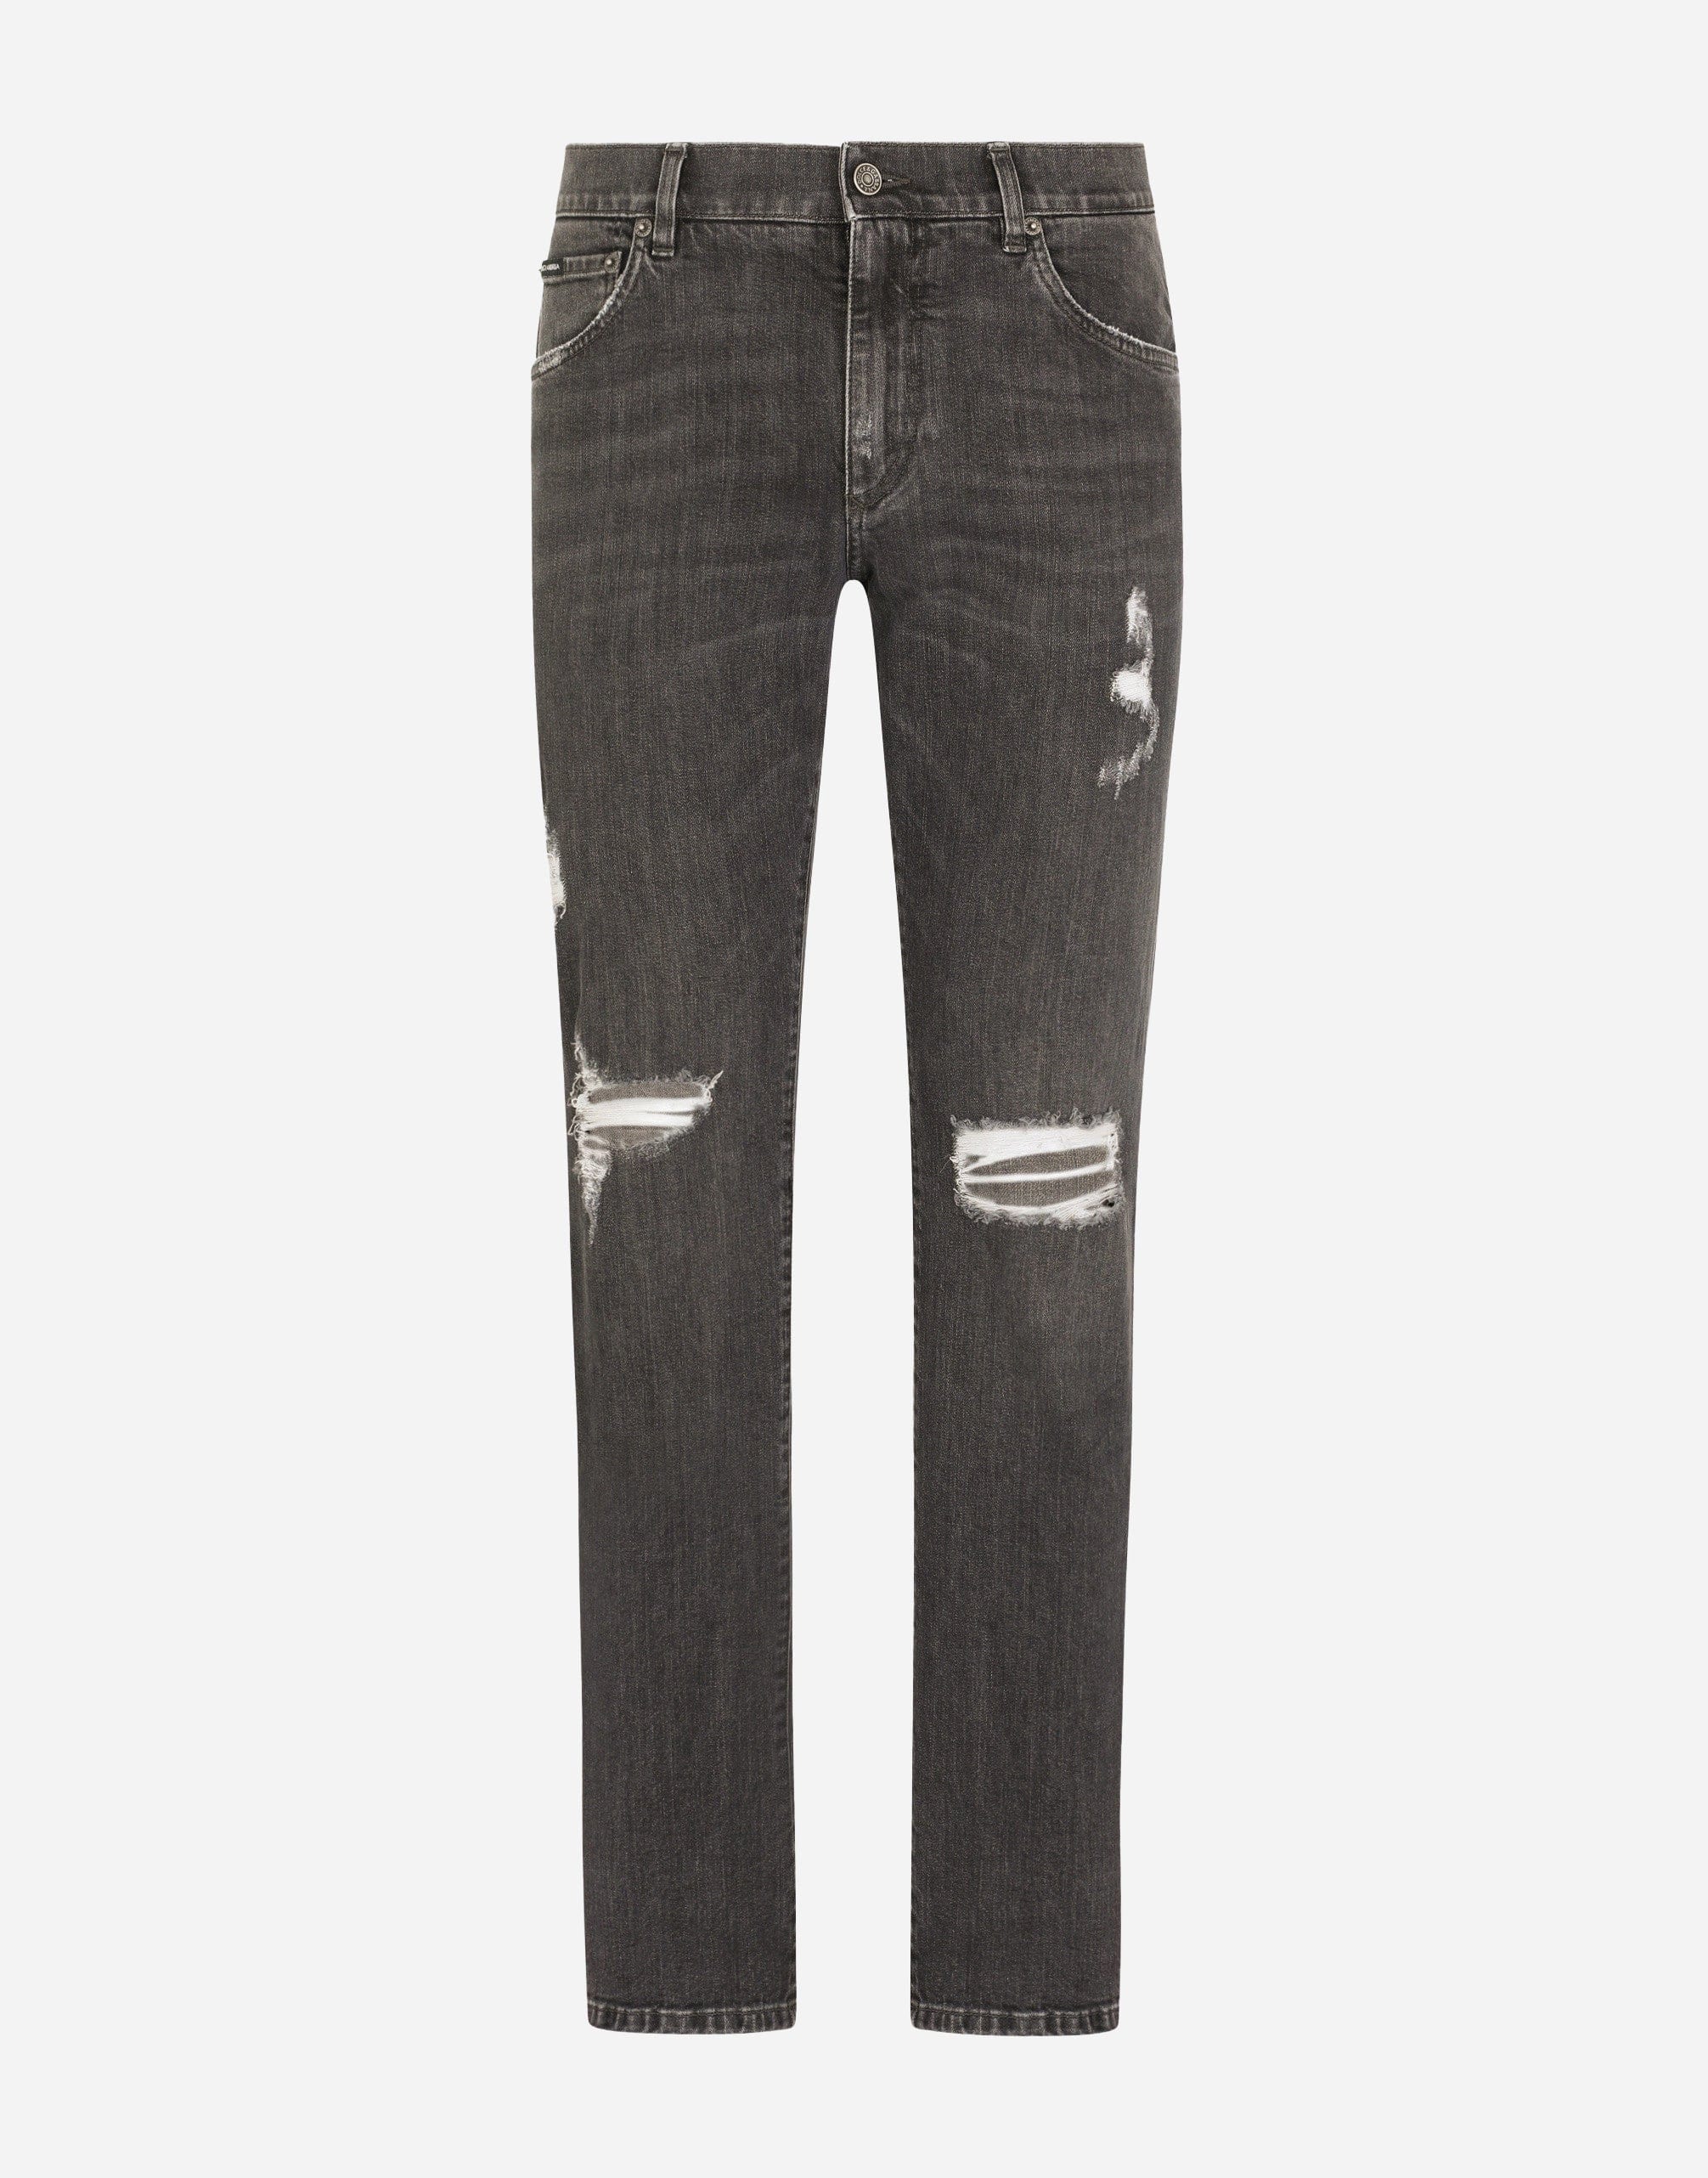 Jeans de algodón de ajuste delgado con rasgaduras